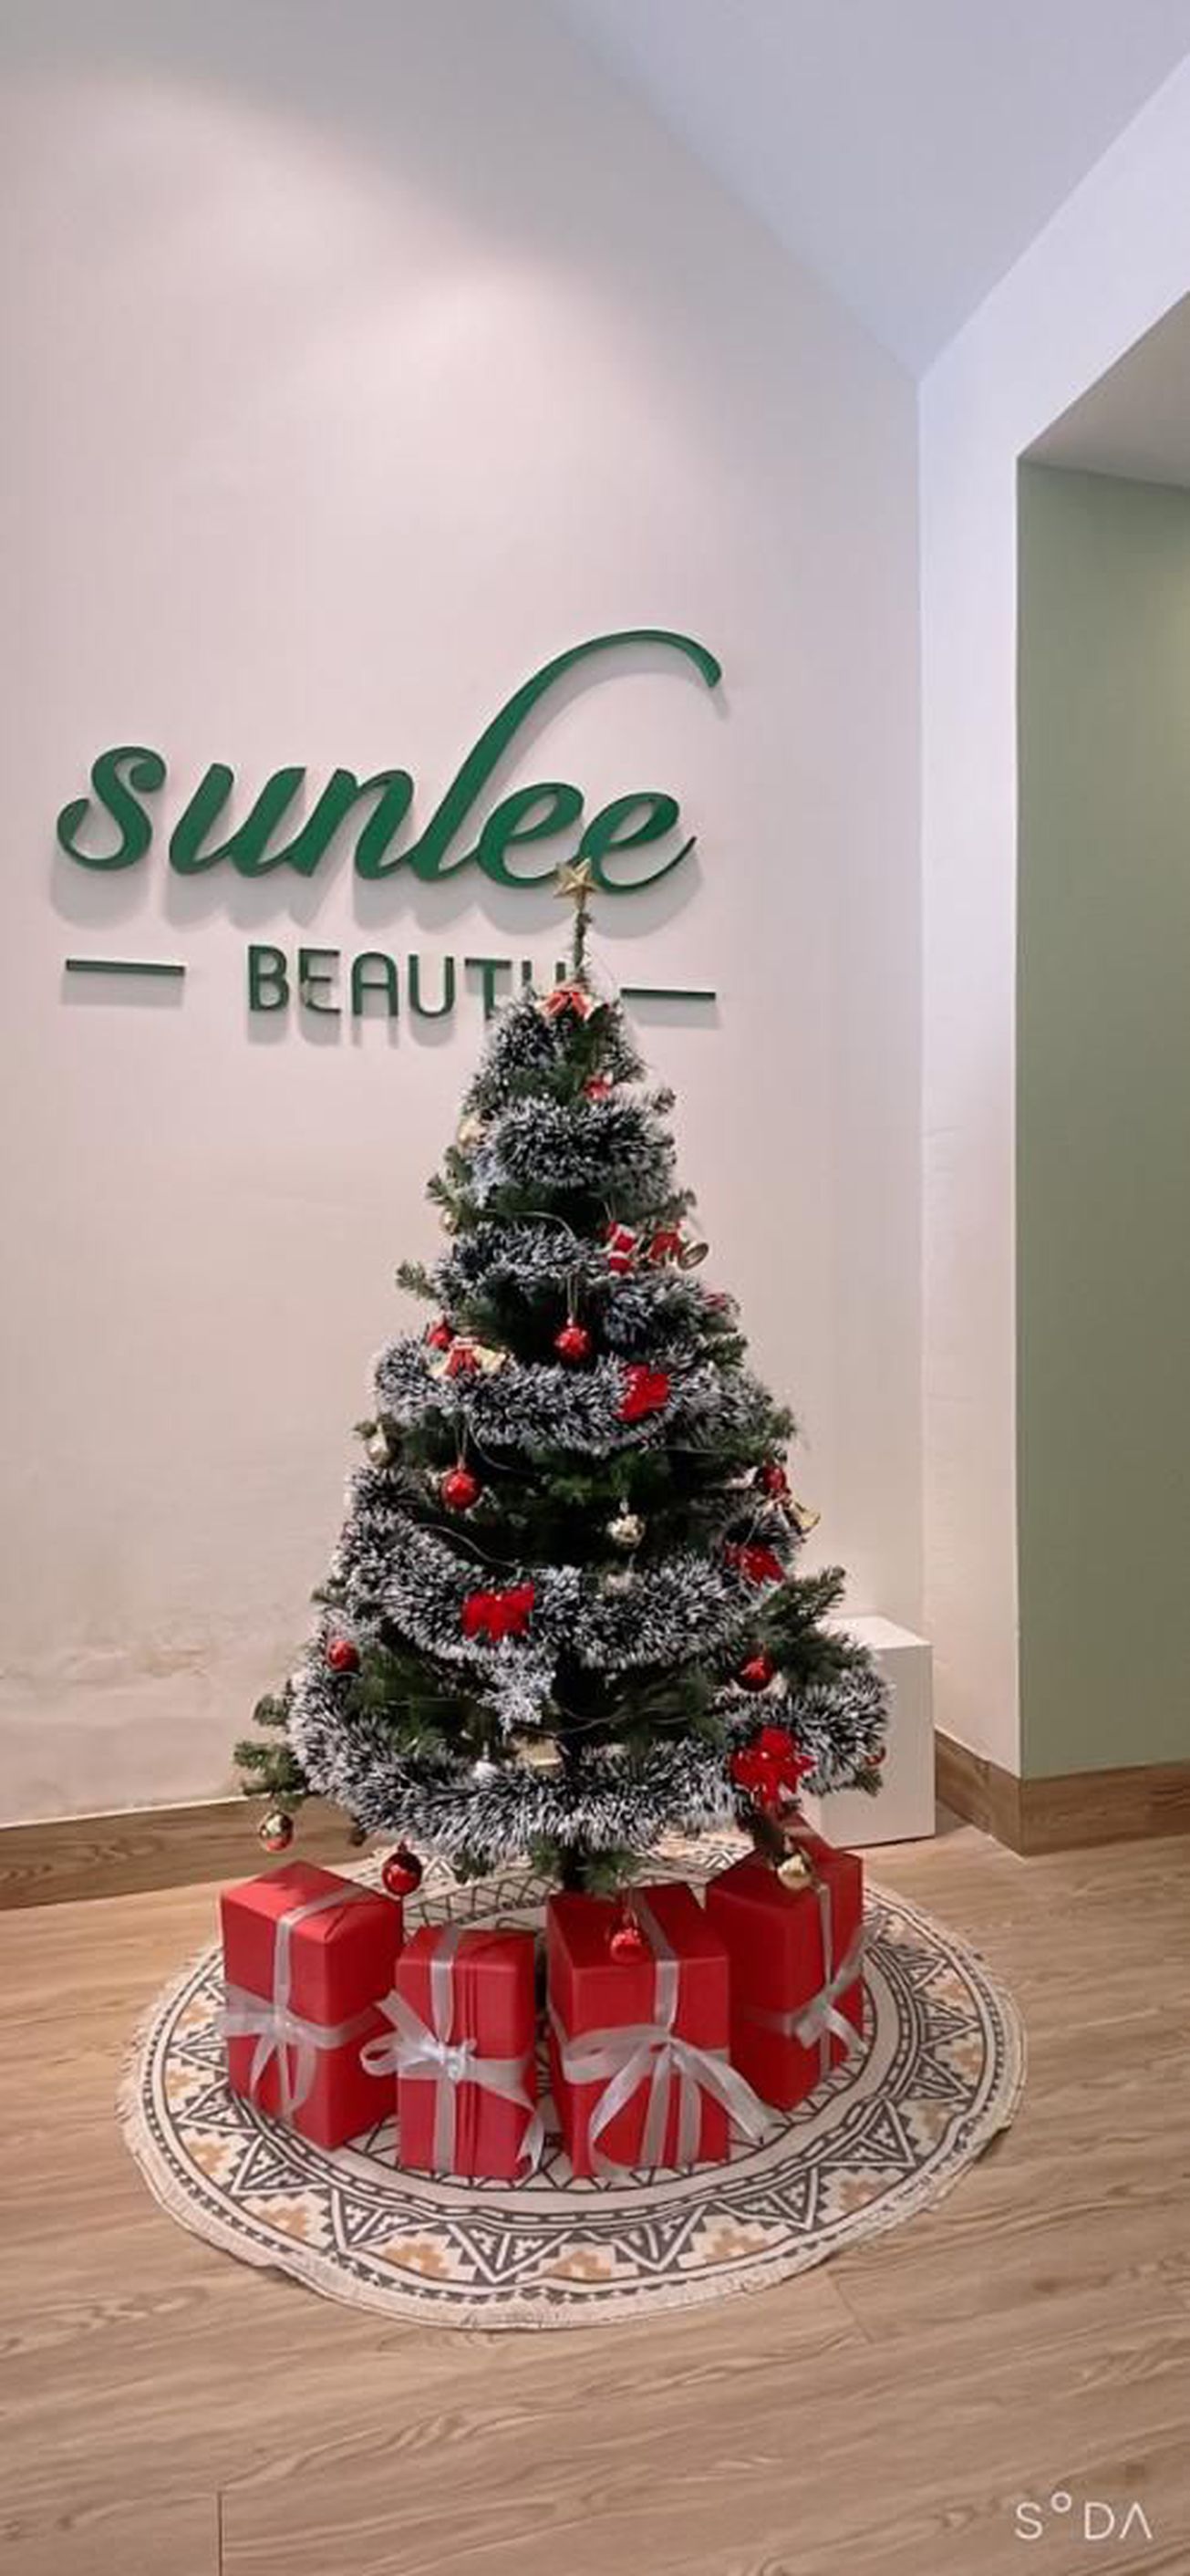 Sunlee Beauty Quận 7 4 gallaries